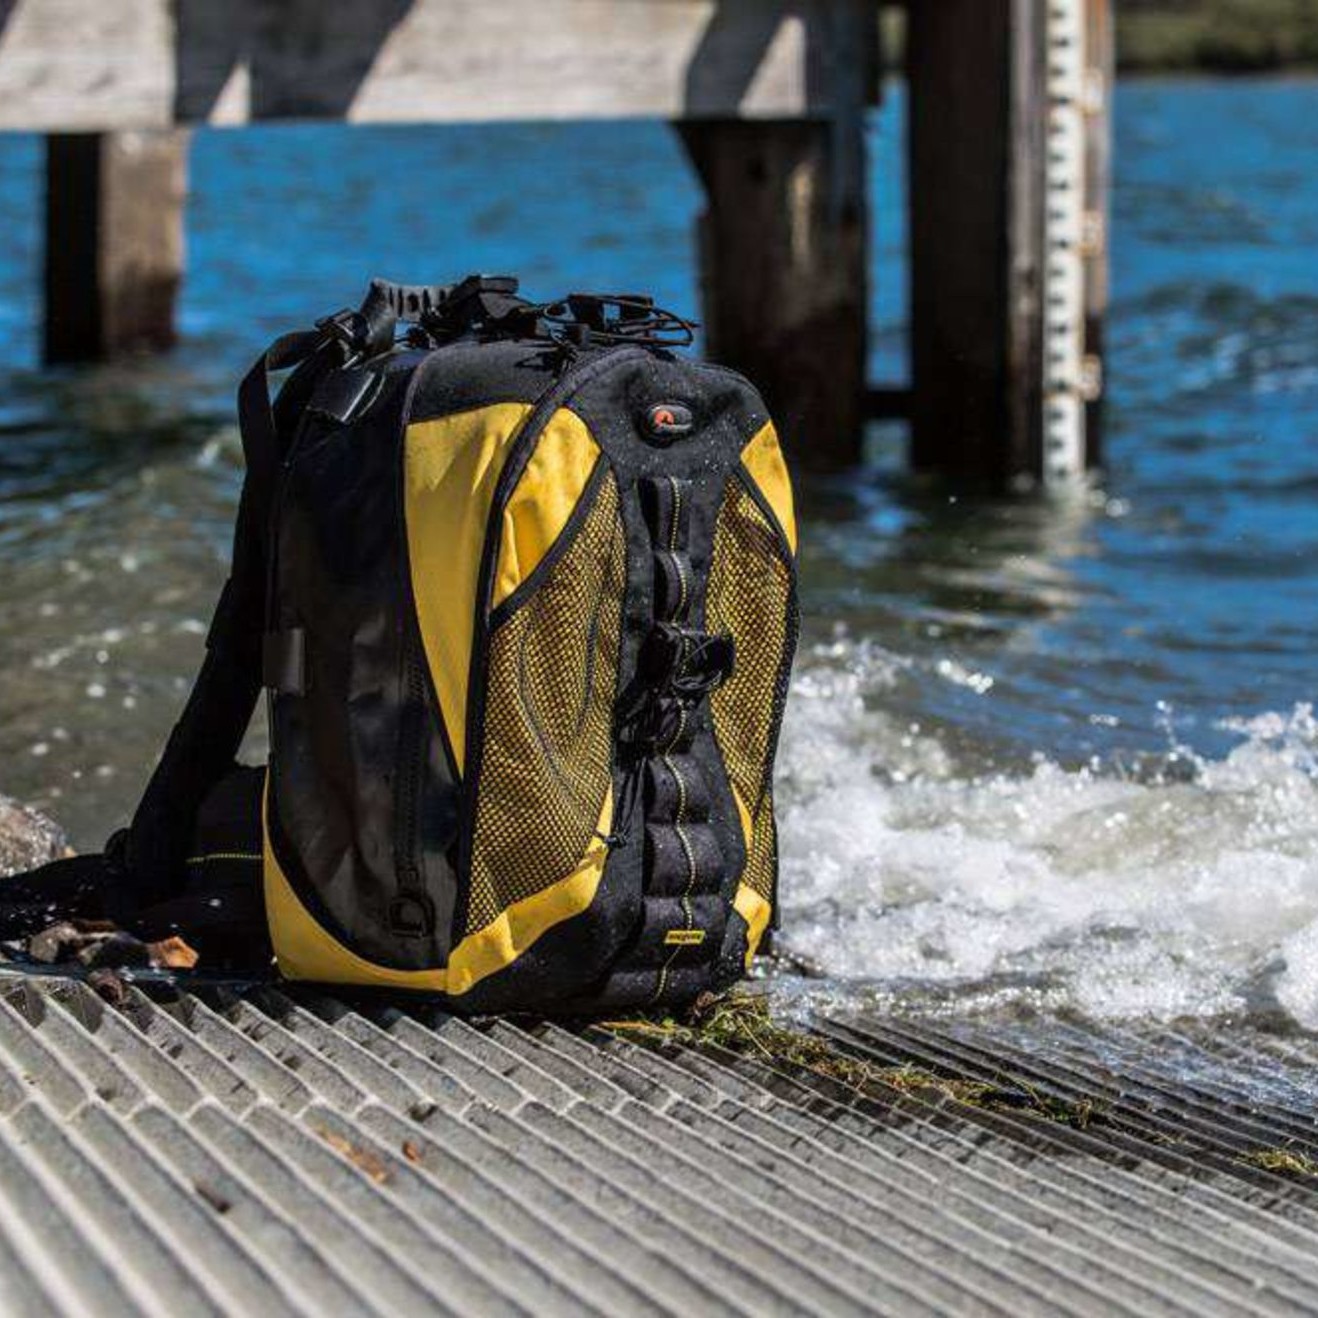 Lowepro DryZone 200 Waterproof 20L Camera Photography Backpack